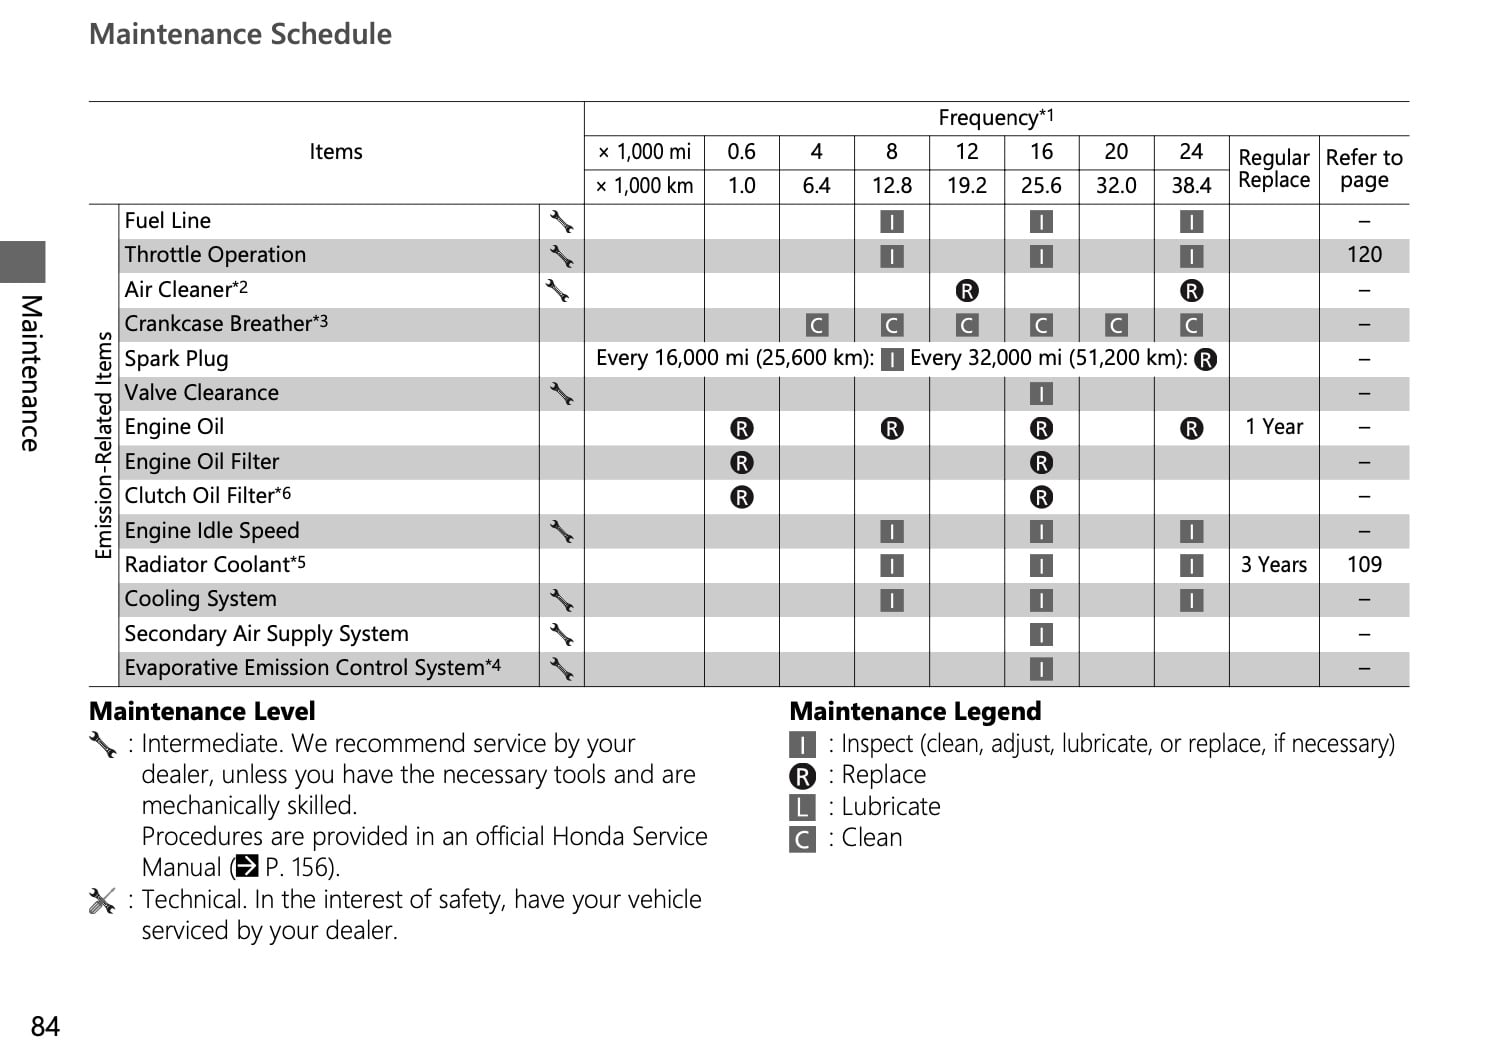 2022 Honda Rebel 1100 maintenance schedule screenshot from manual